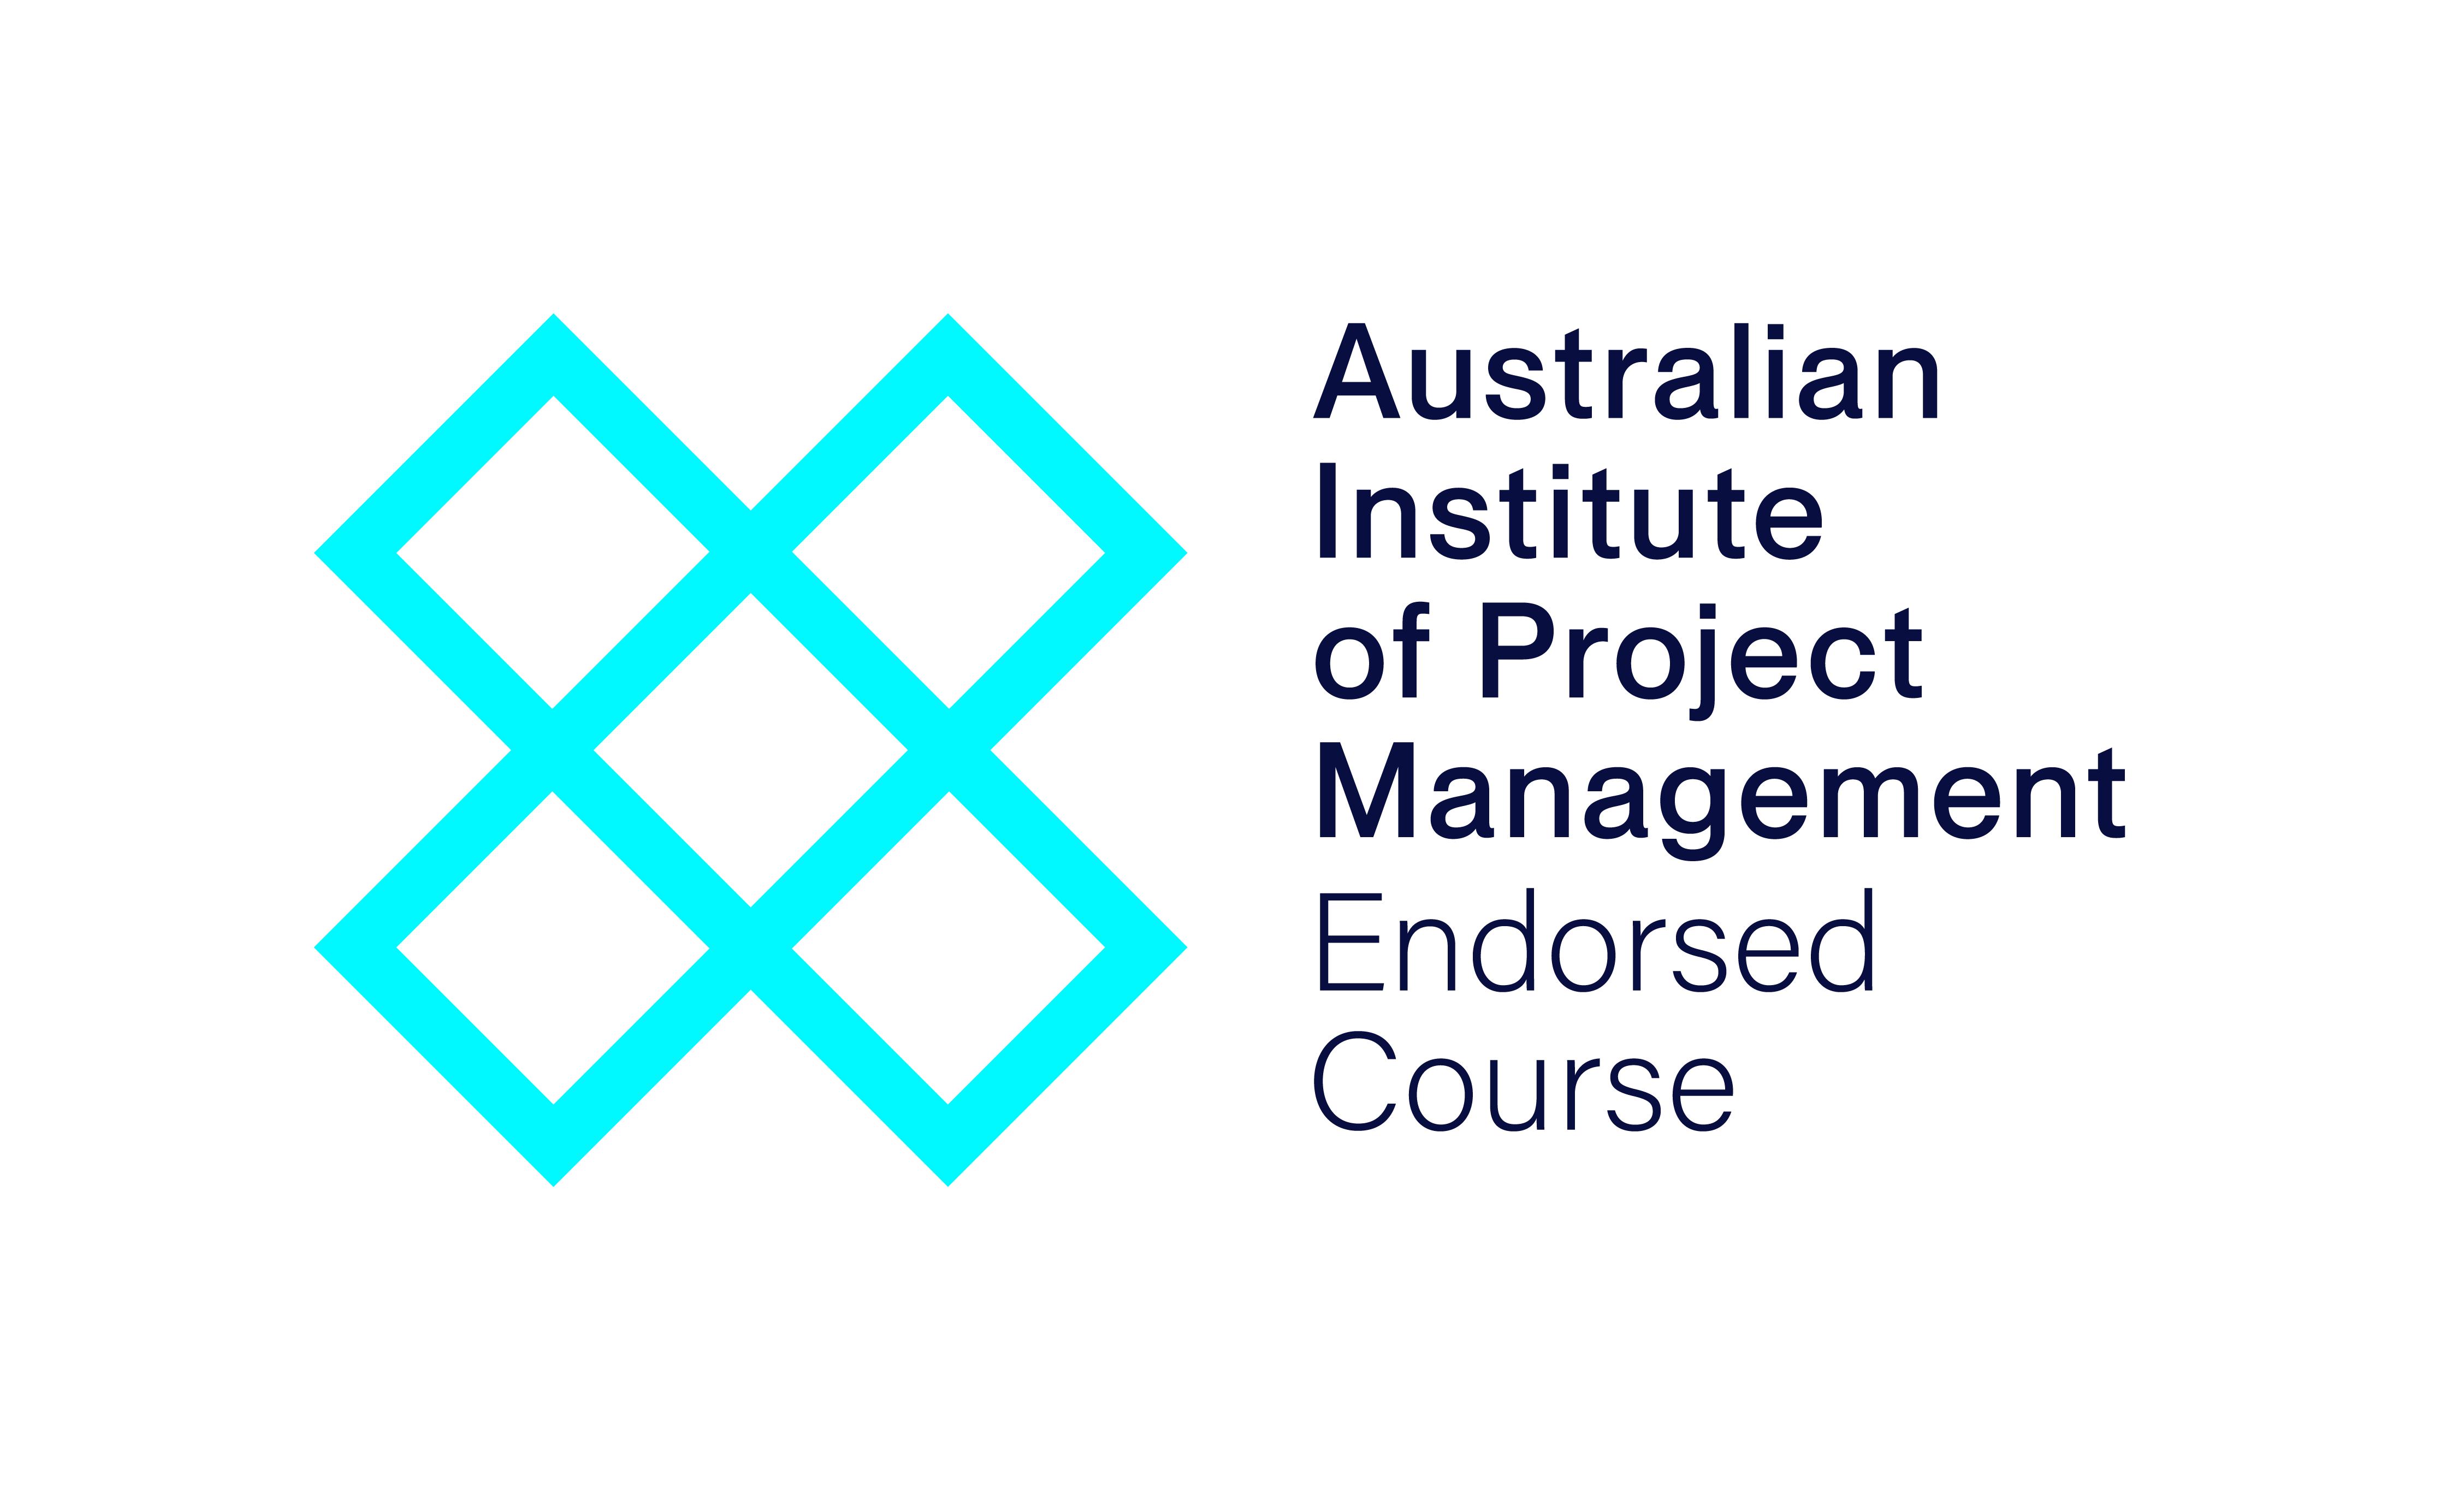 Australian Institute of Project Management logo.